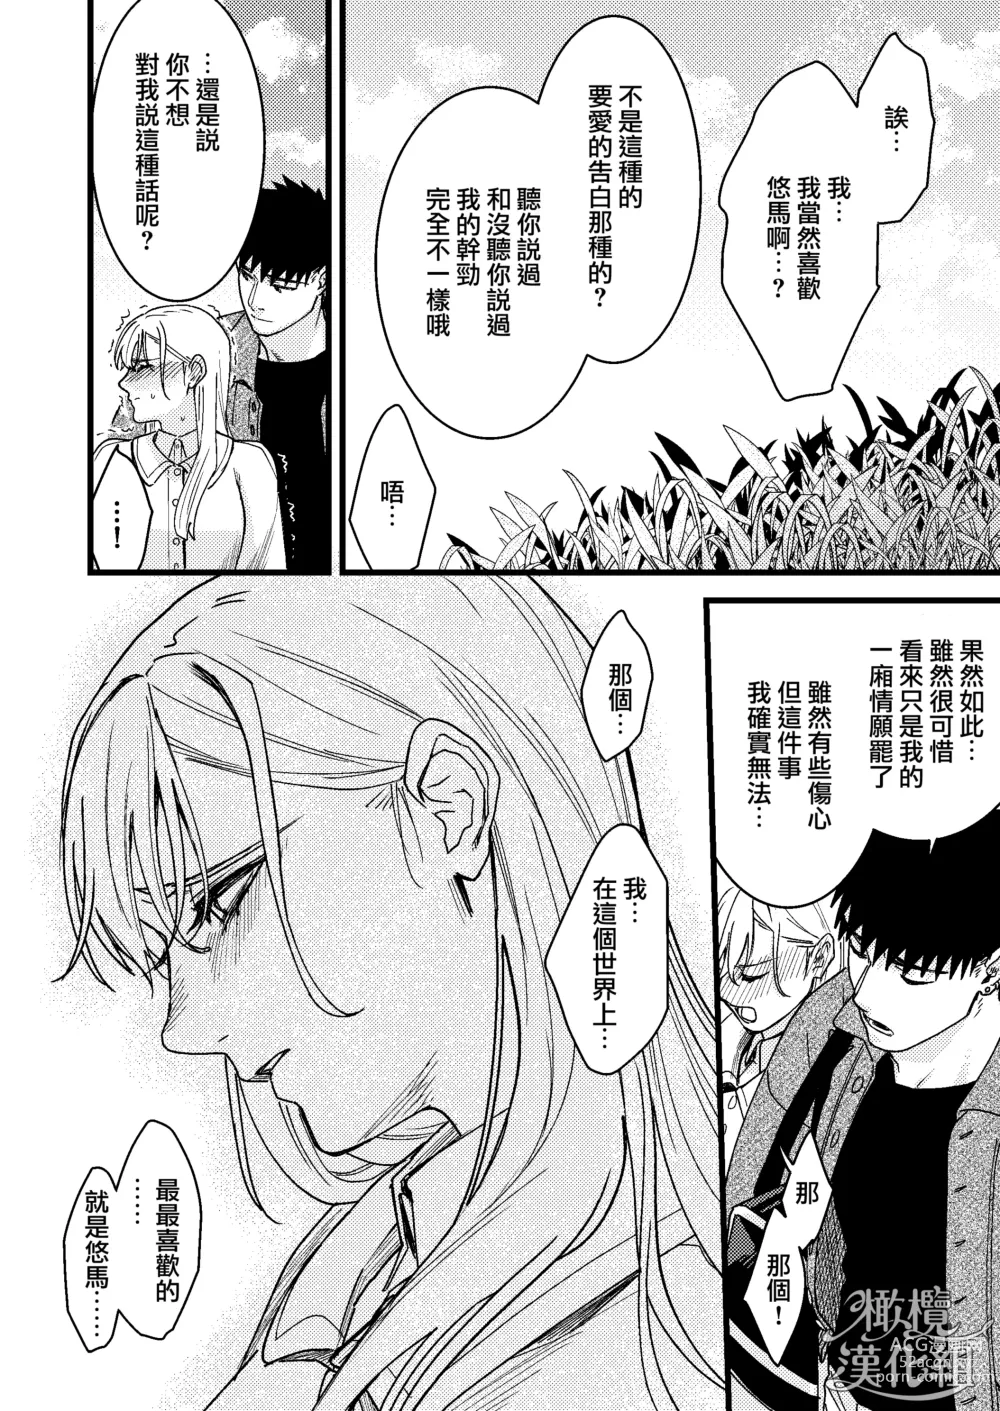 Page 149 of doujinshi 他的隐情和她的秘密+番外